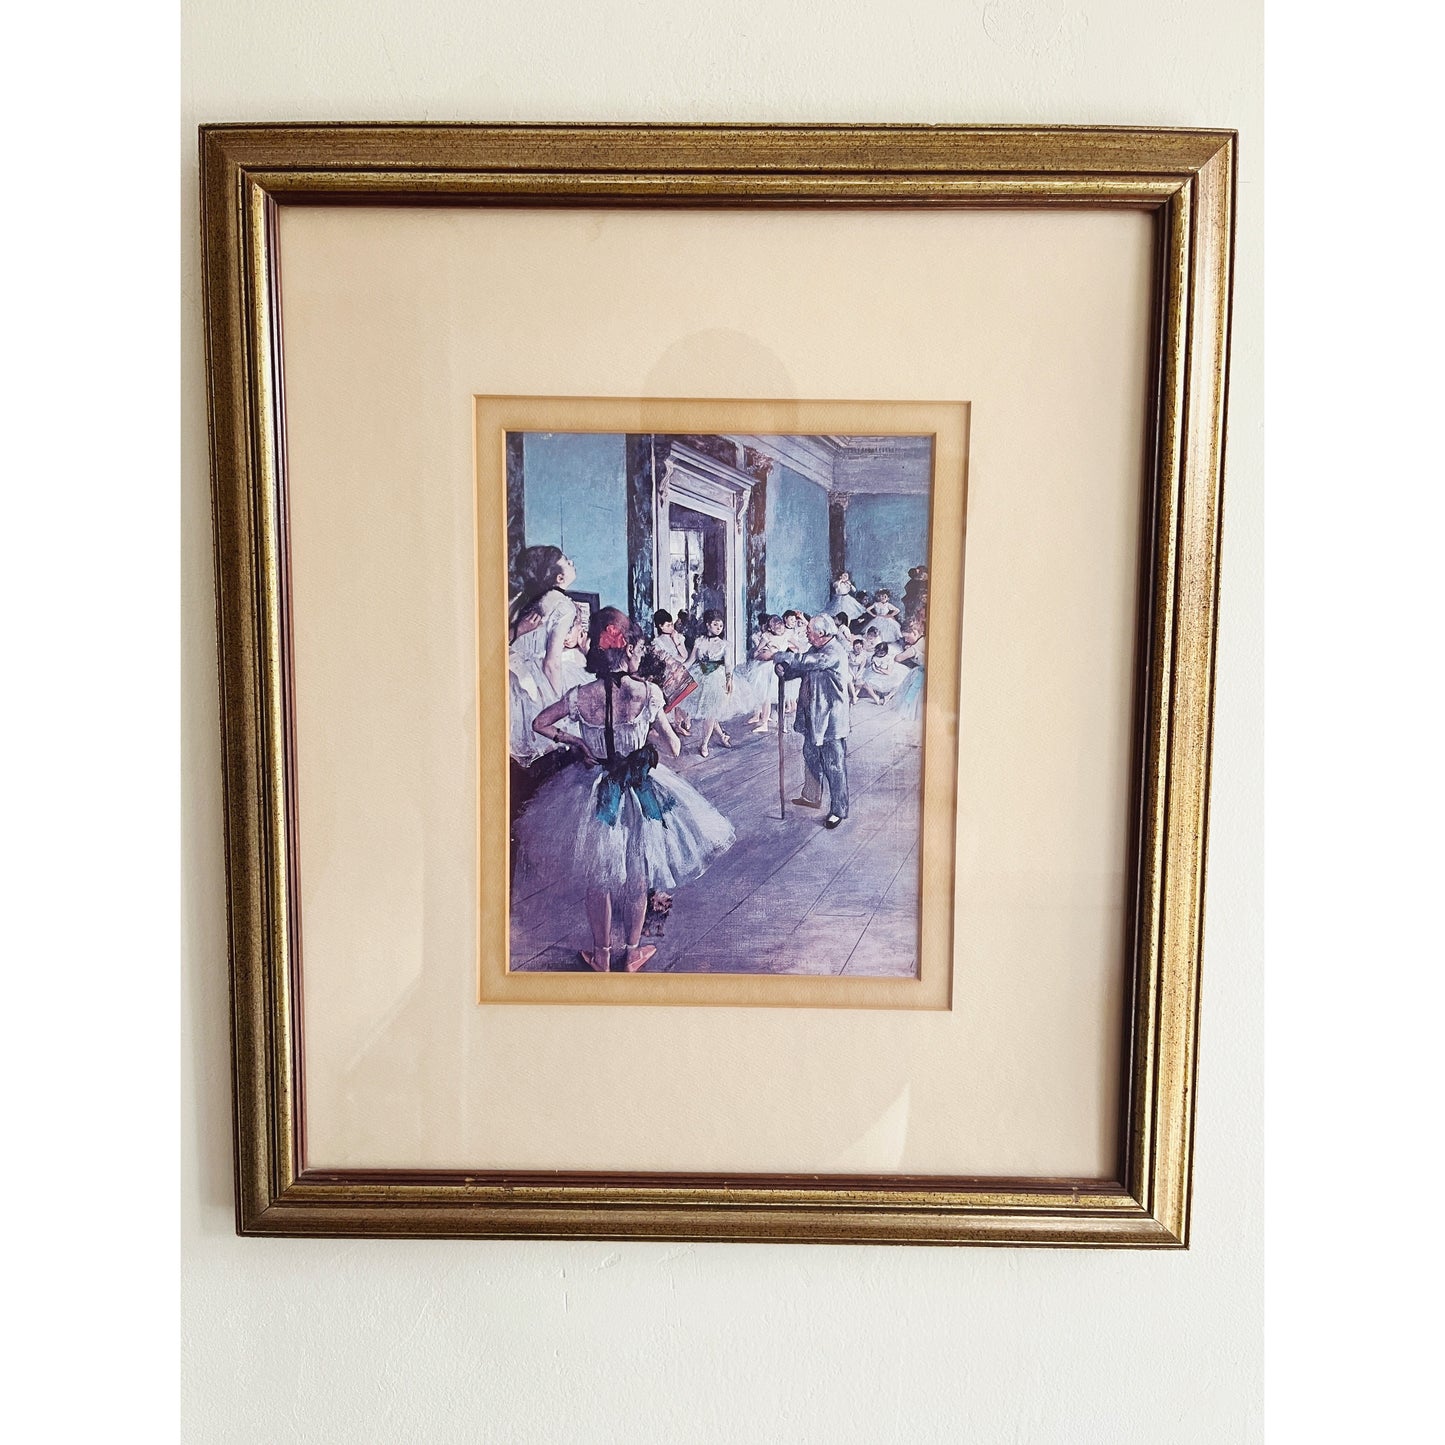 Two Dancers & the Dancing Class (Print by Edgar Degas)